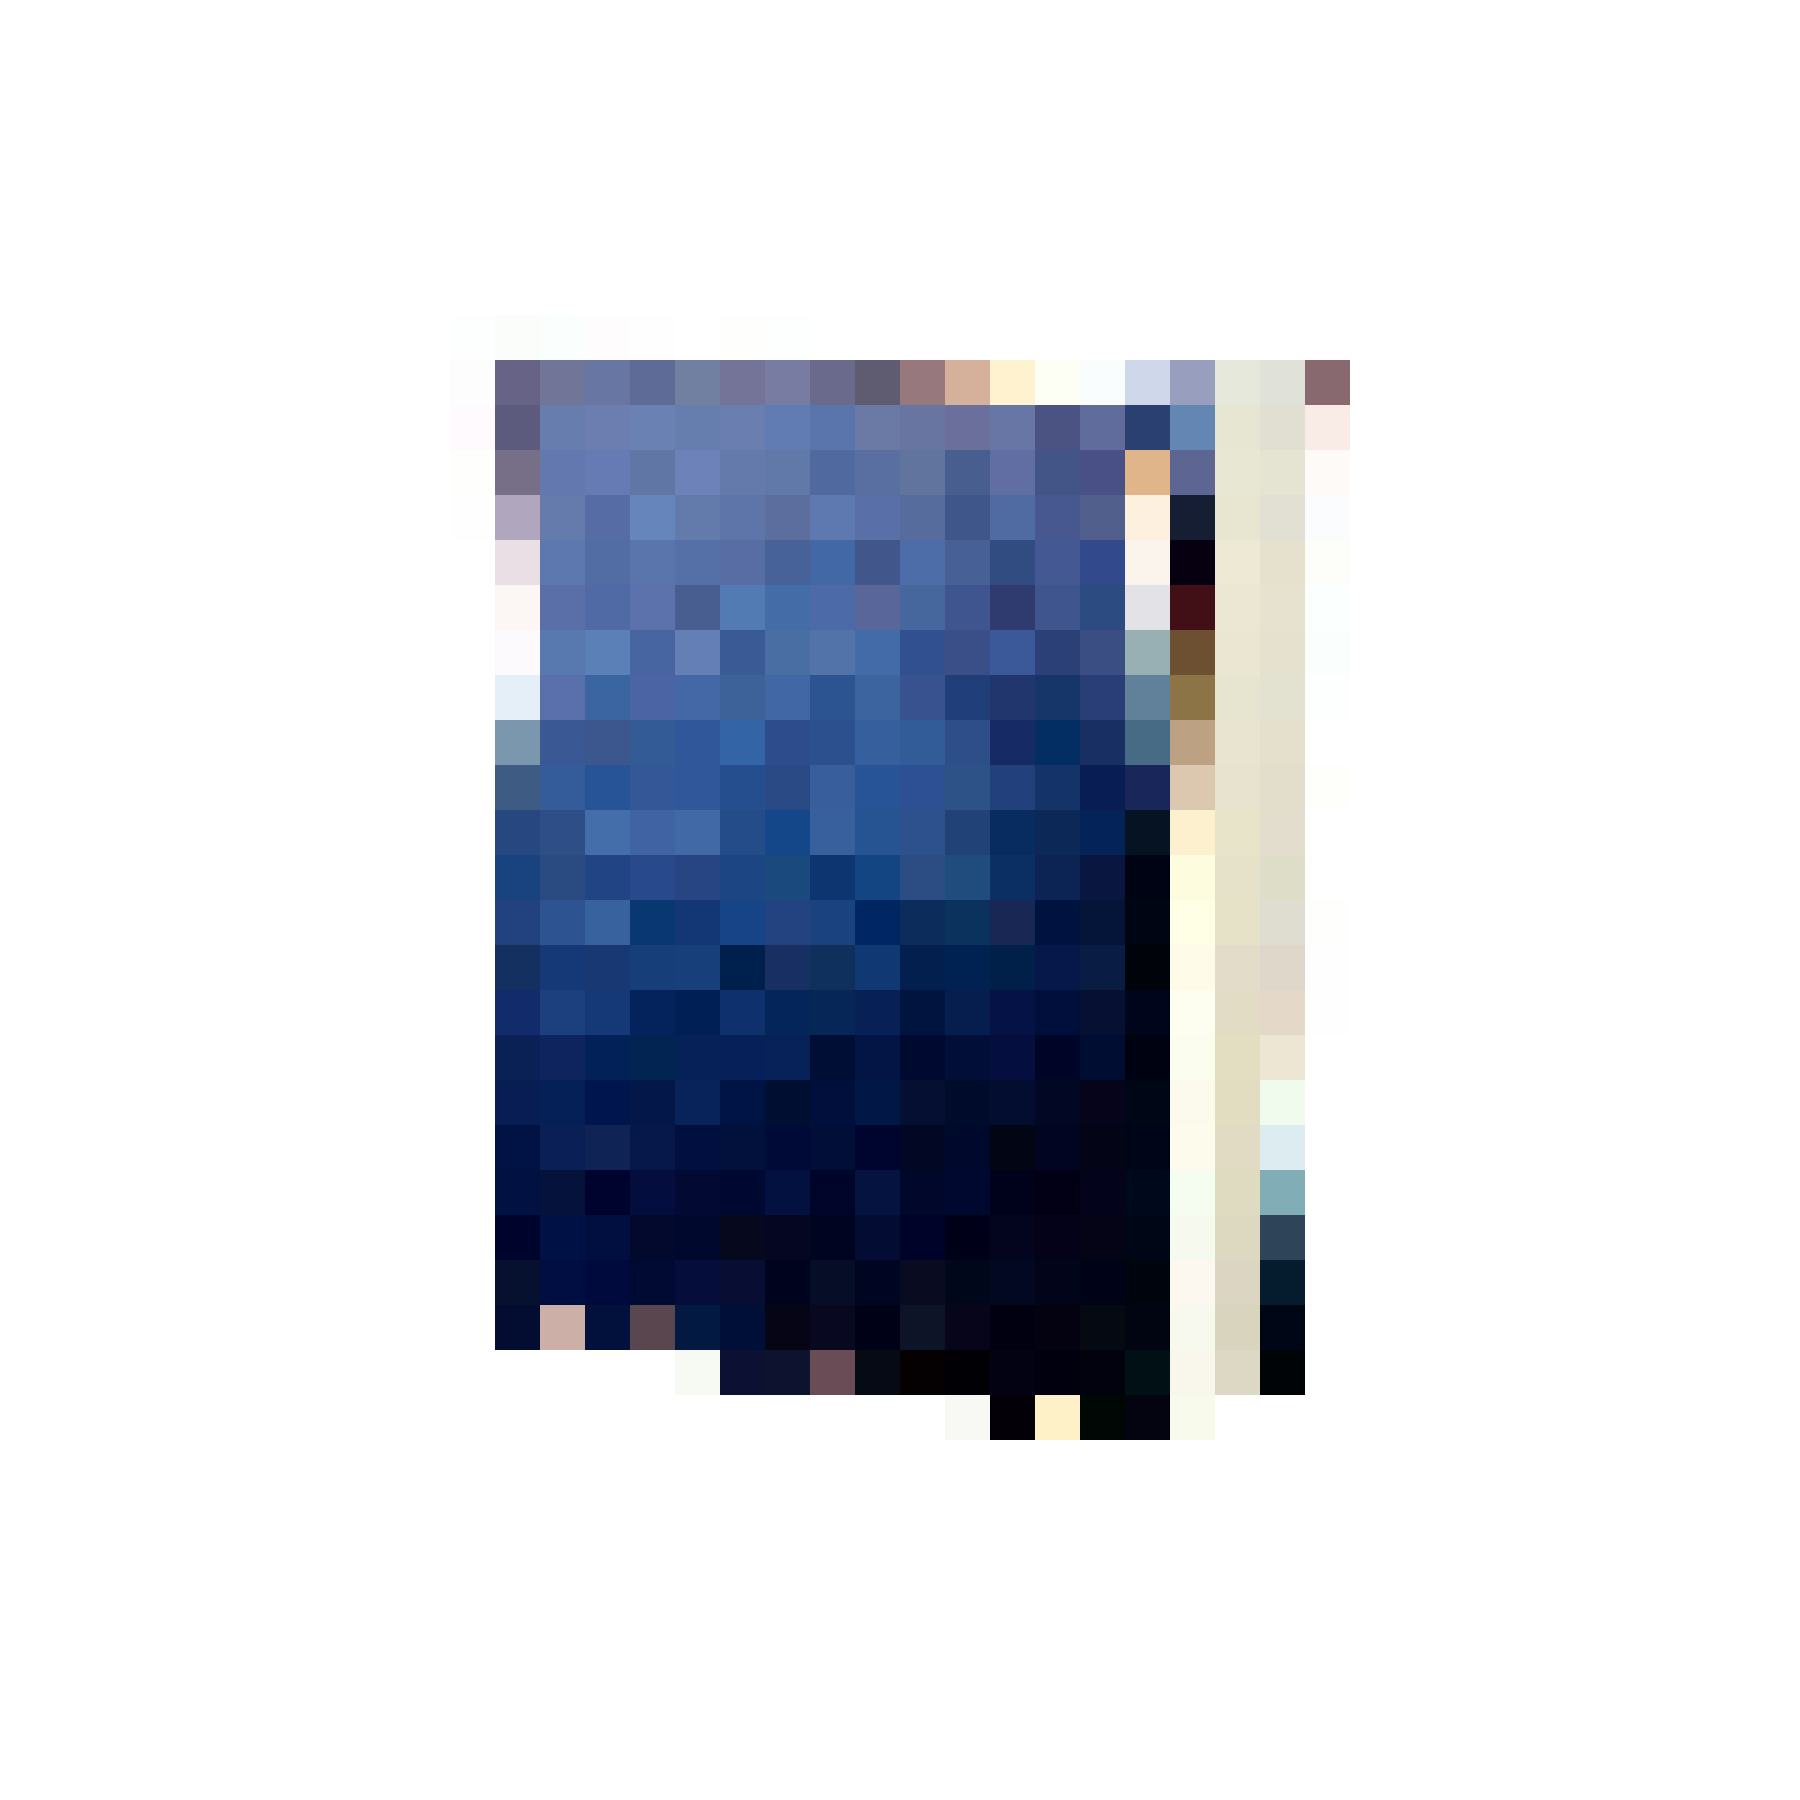 Old school: Album photo standard bleu, 25×30 cm, 19 fr. 95, Coop.